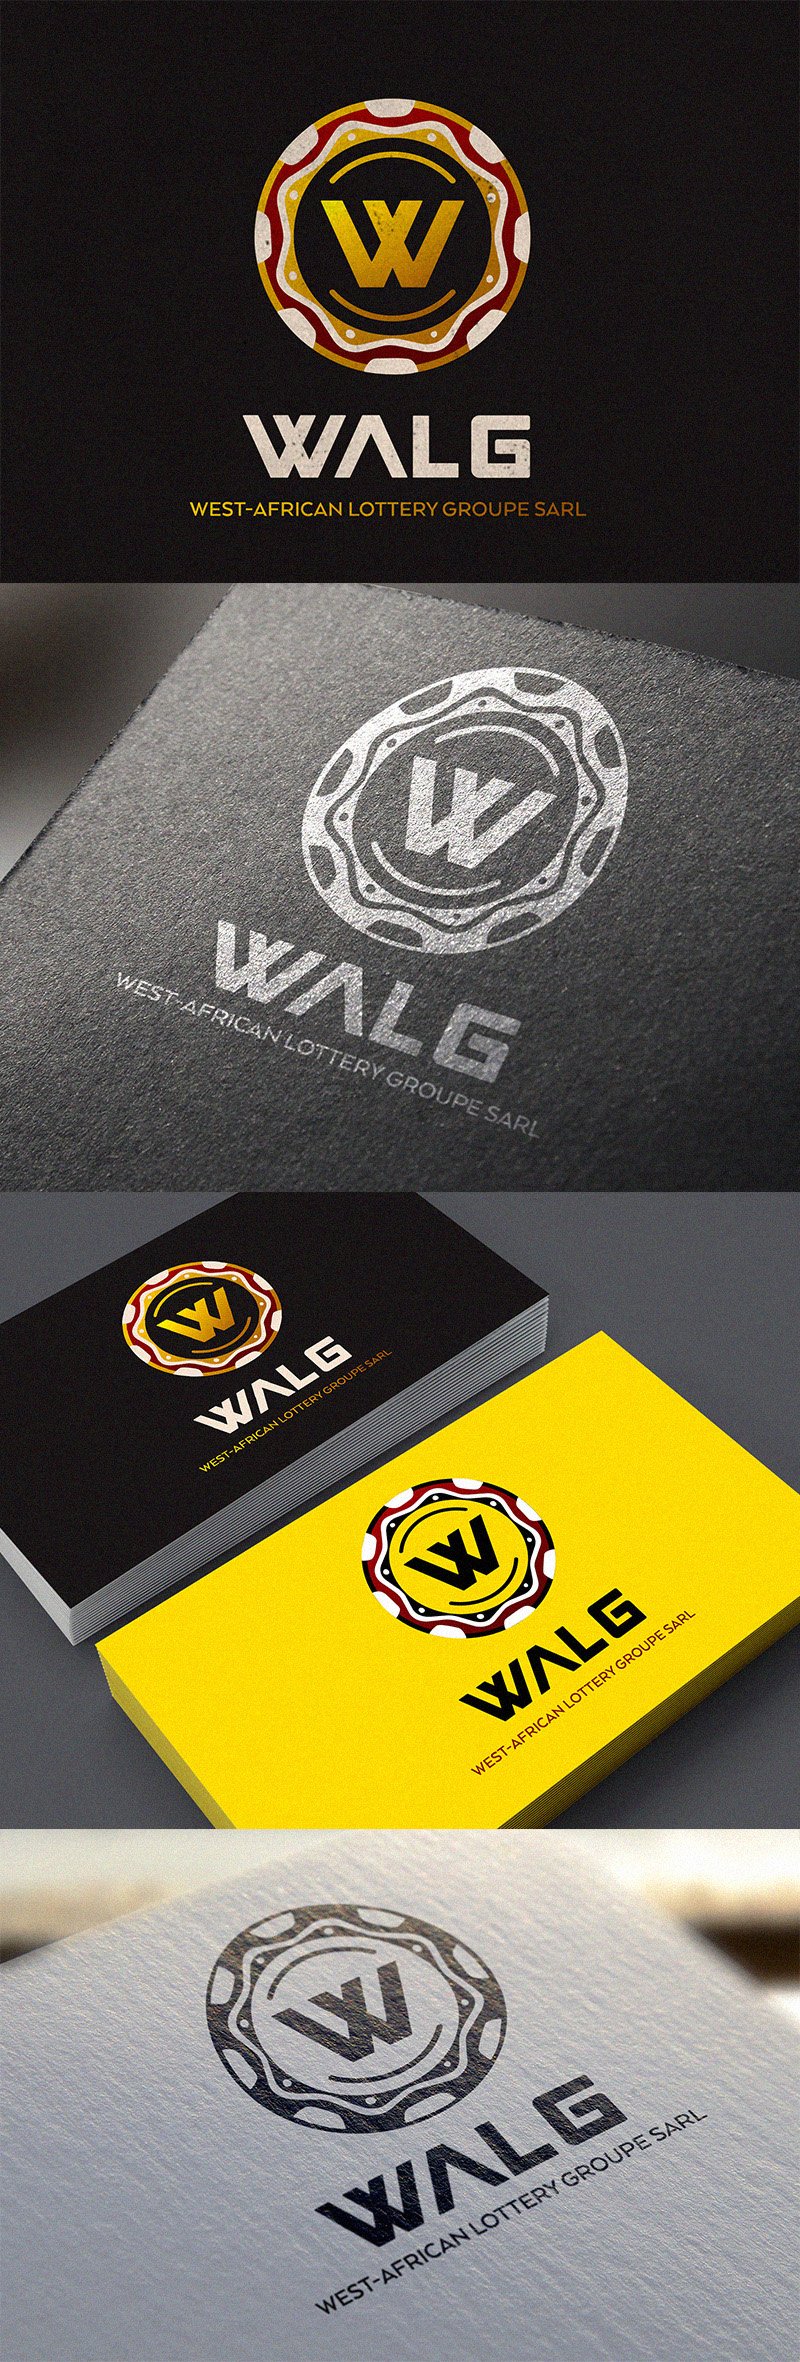 WALG логотип вид на материалах